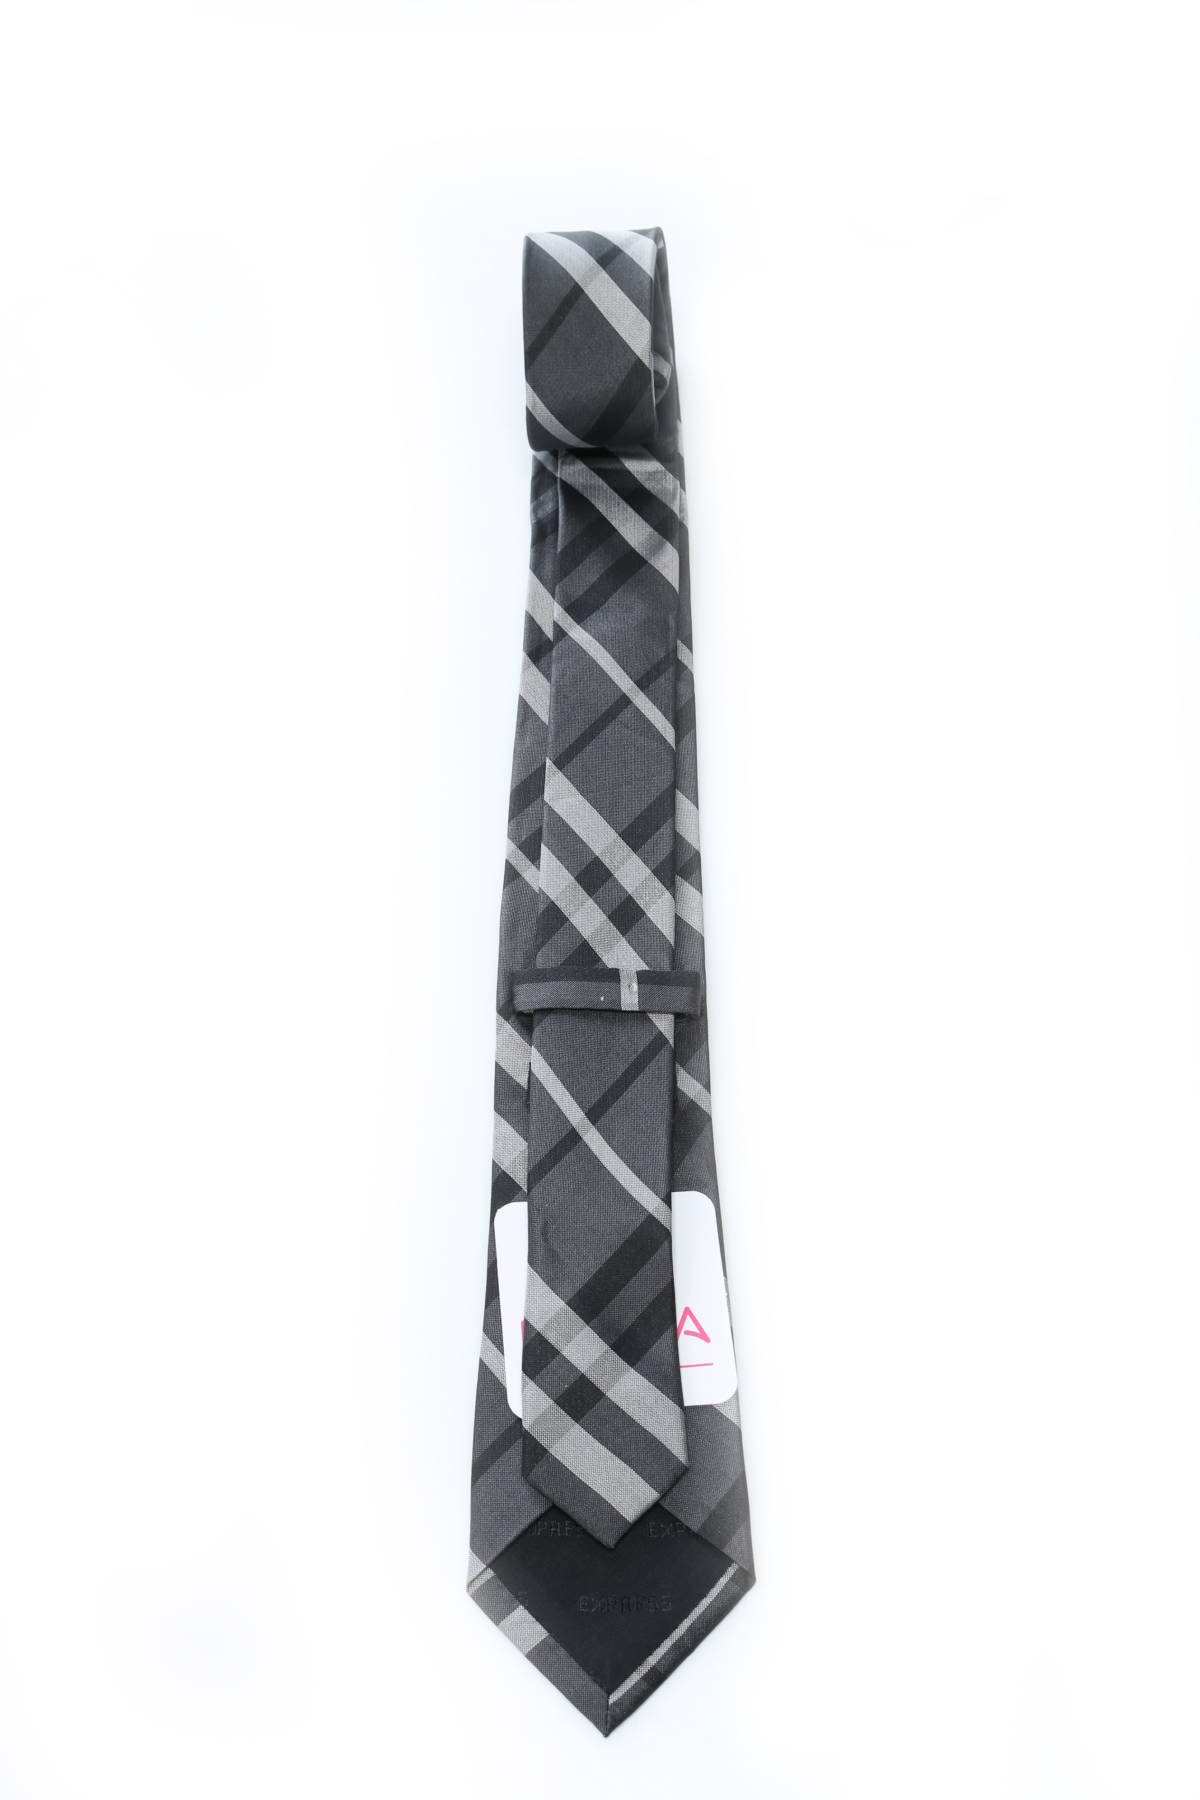 Вратовръзка EXPRESS2